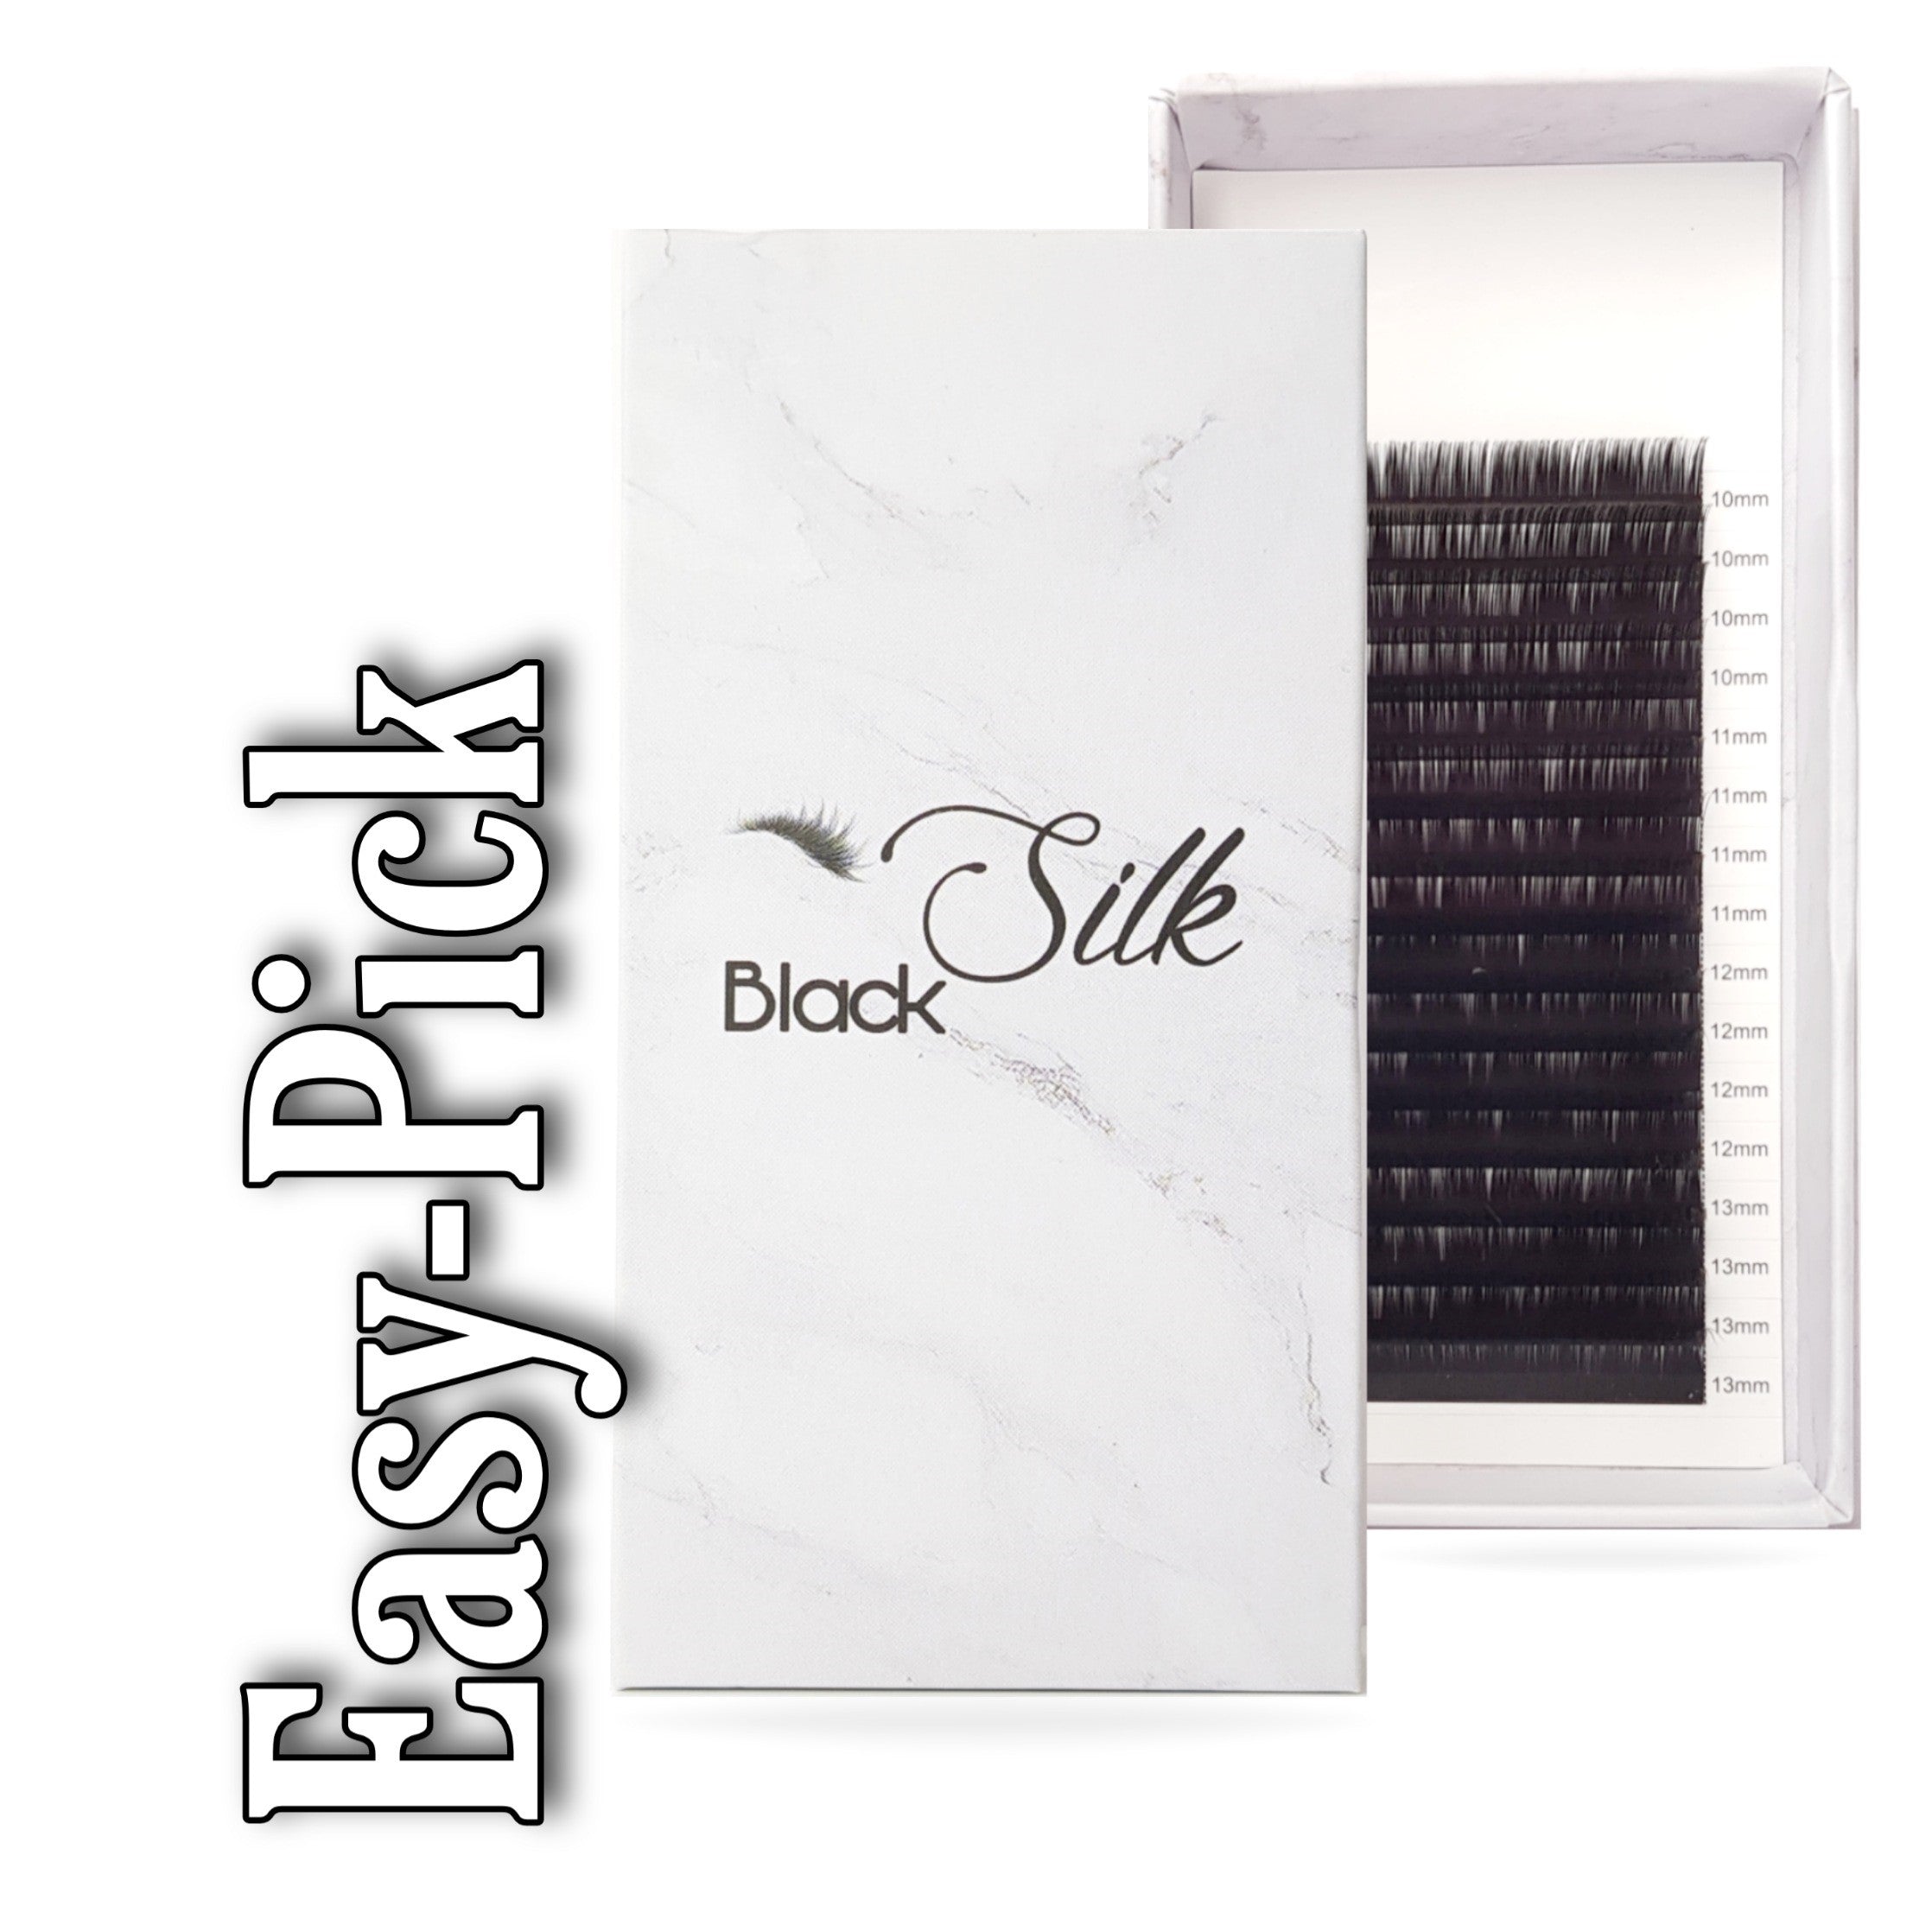 Original Volume - BLACK Silk 0.05 - Easy Pick